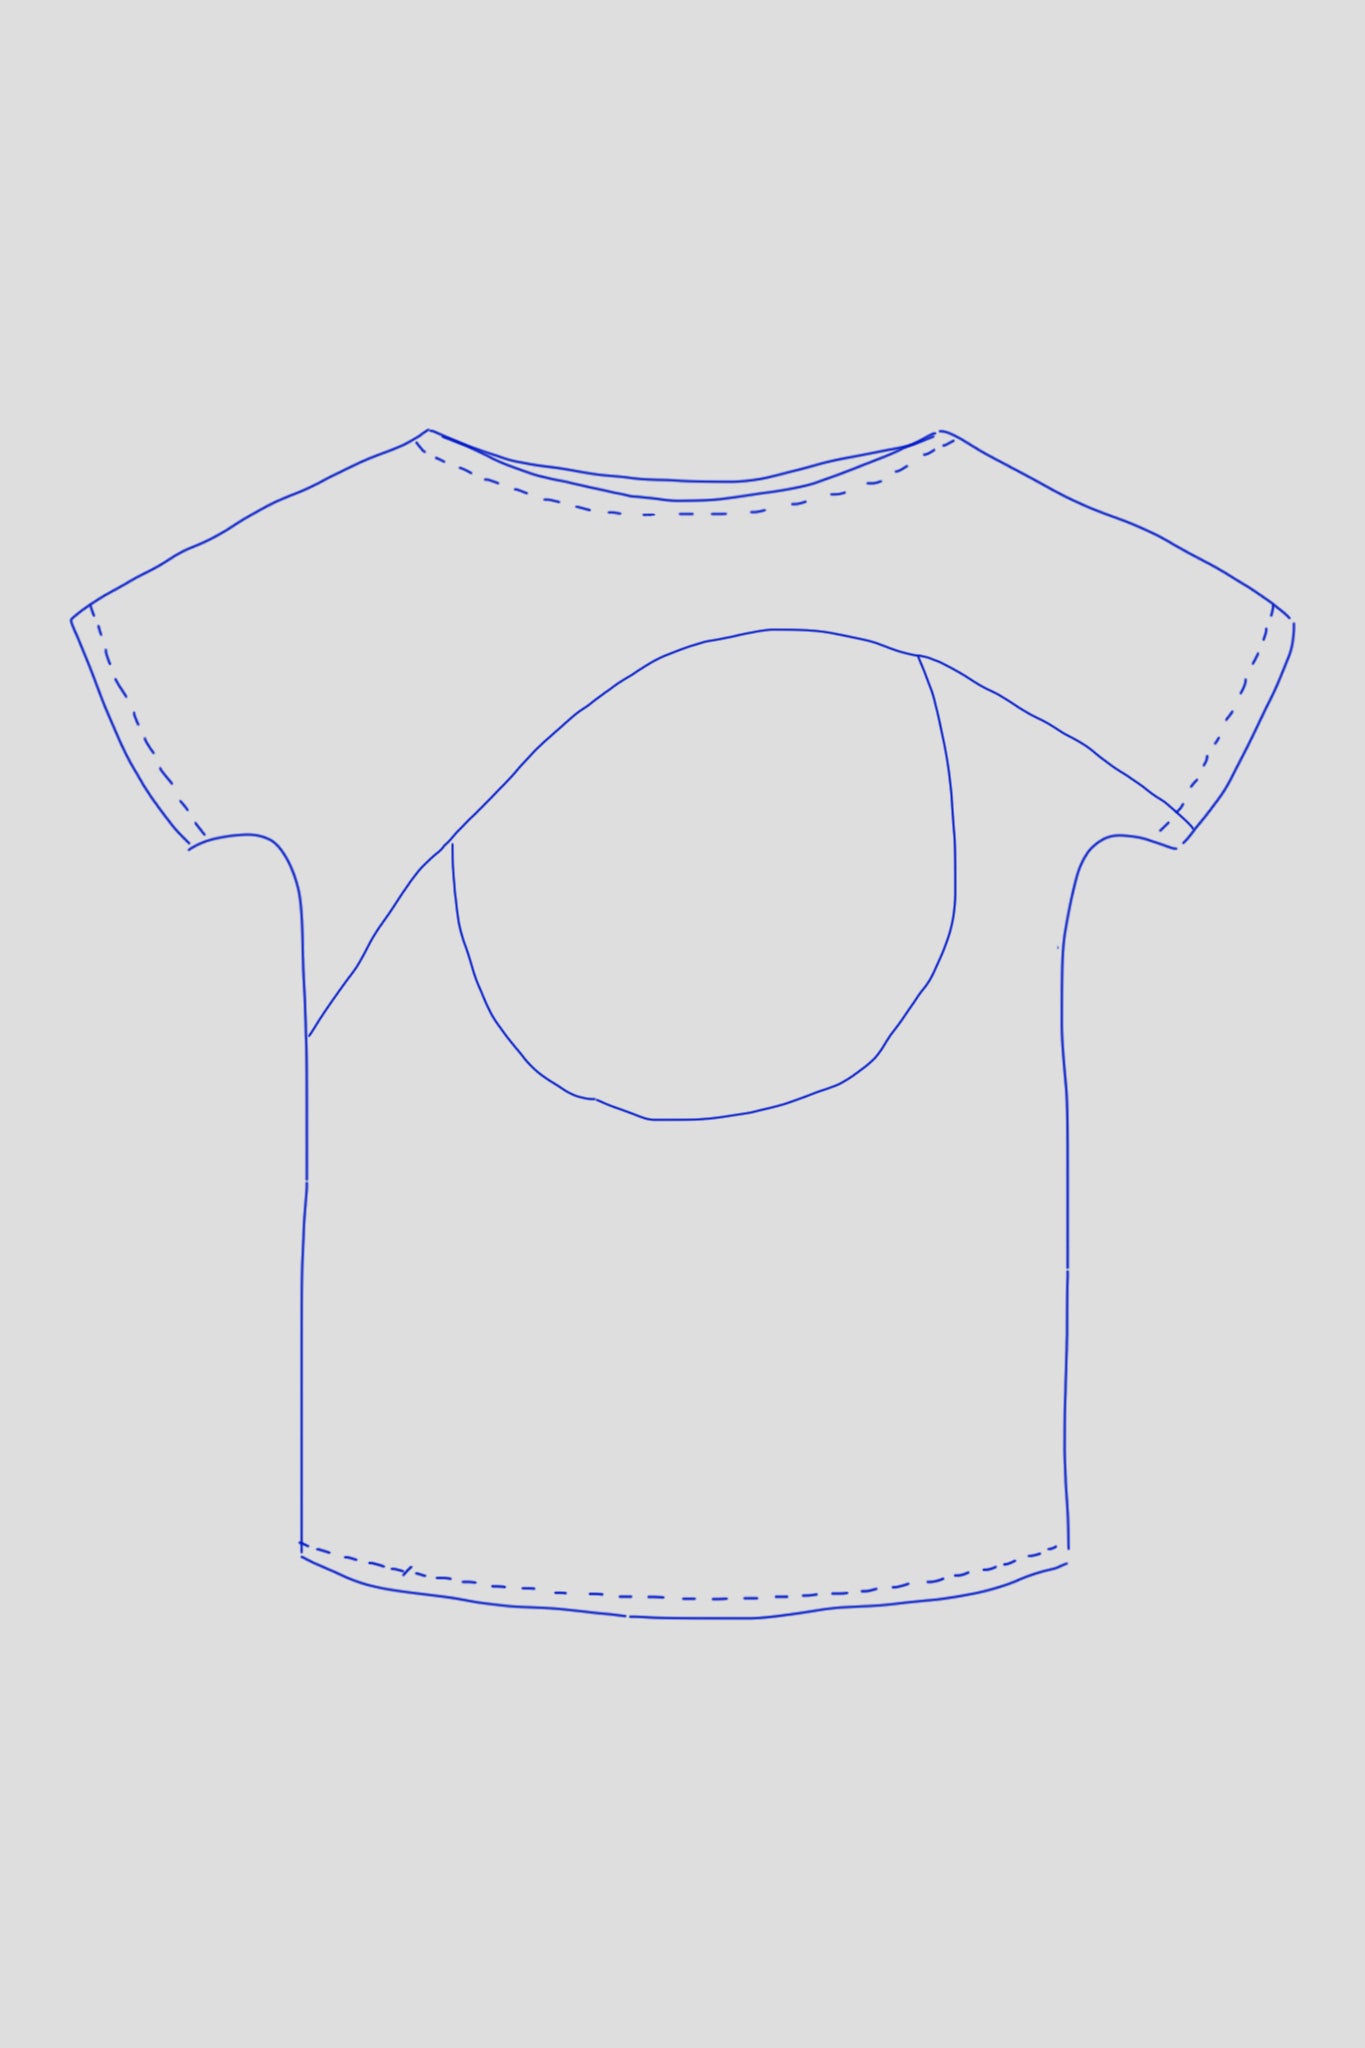 Naiste up-shirt, kuumotiiviga | Kohalikult upcycled